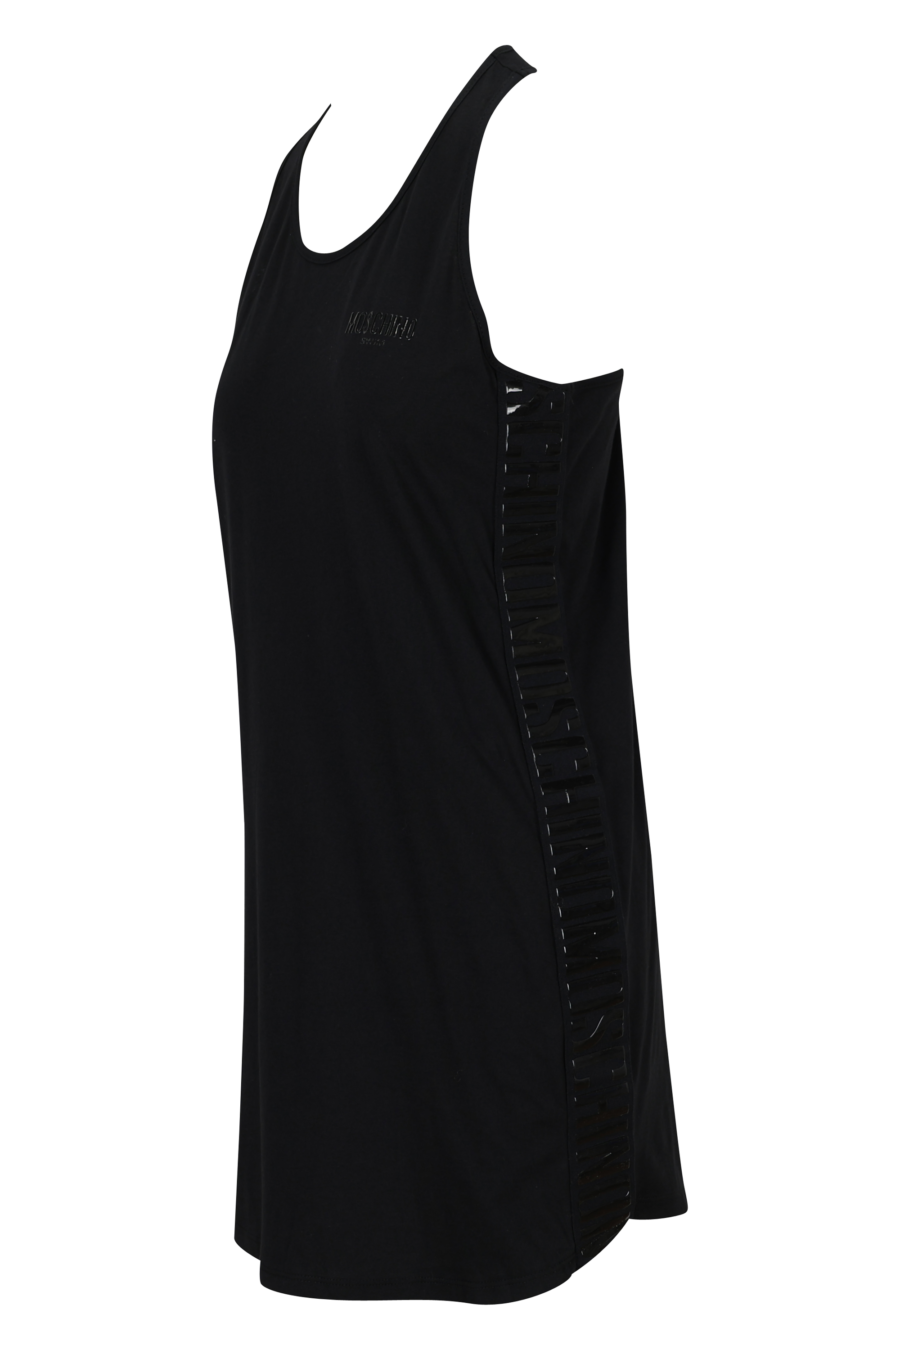 Vestido negro con minilogo monocromático - 667113657646 1